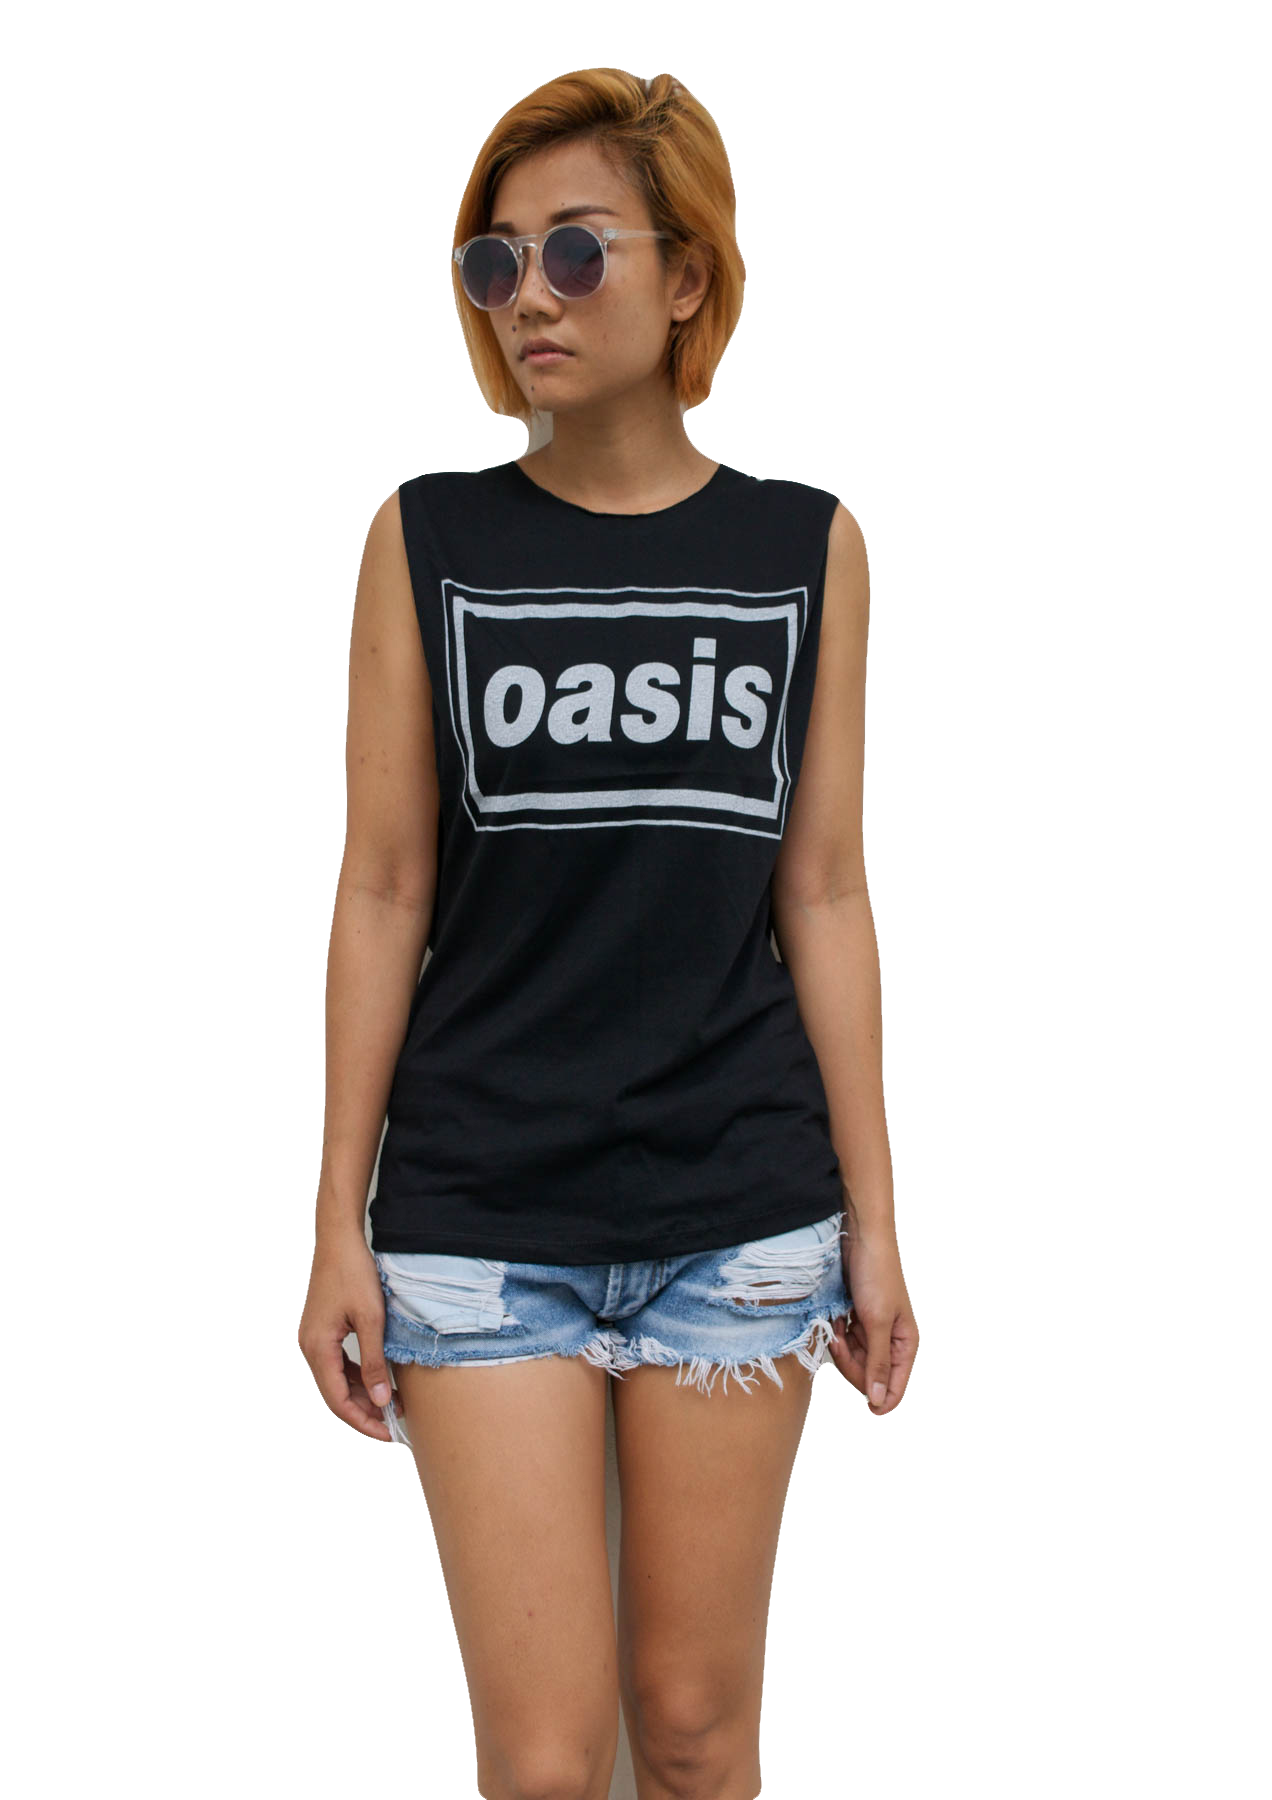 Ladies Oasis Vest Tank-Top Singlet Sleeveless T-Shirt